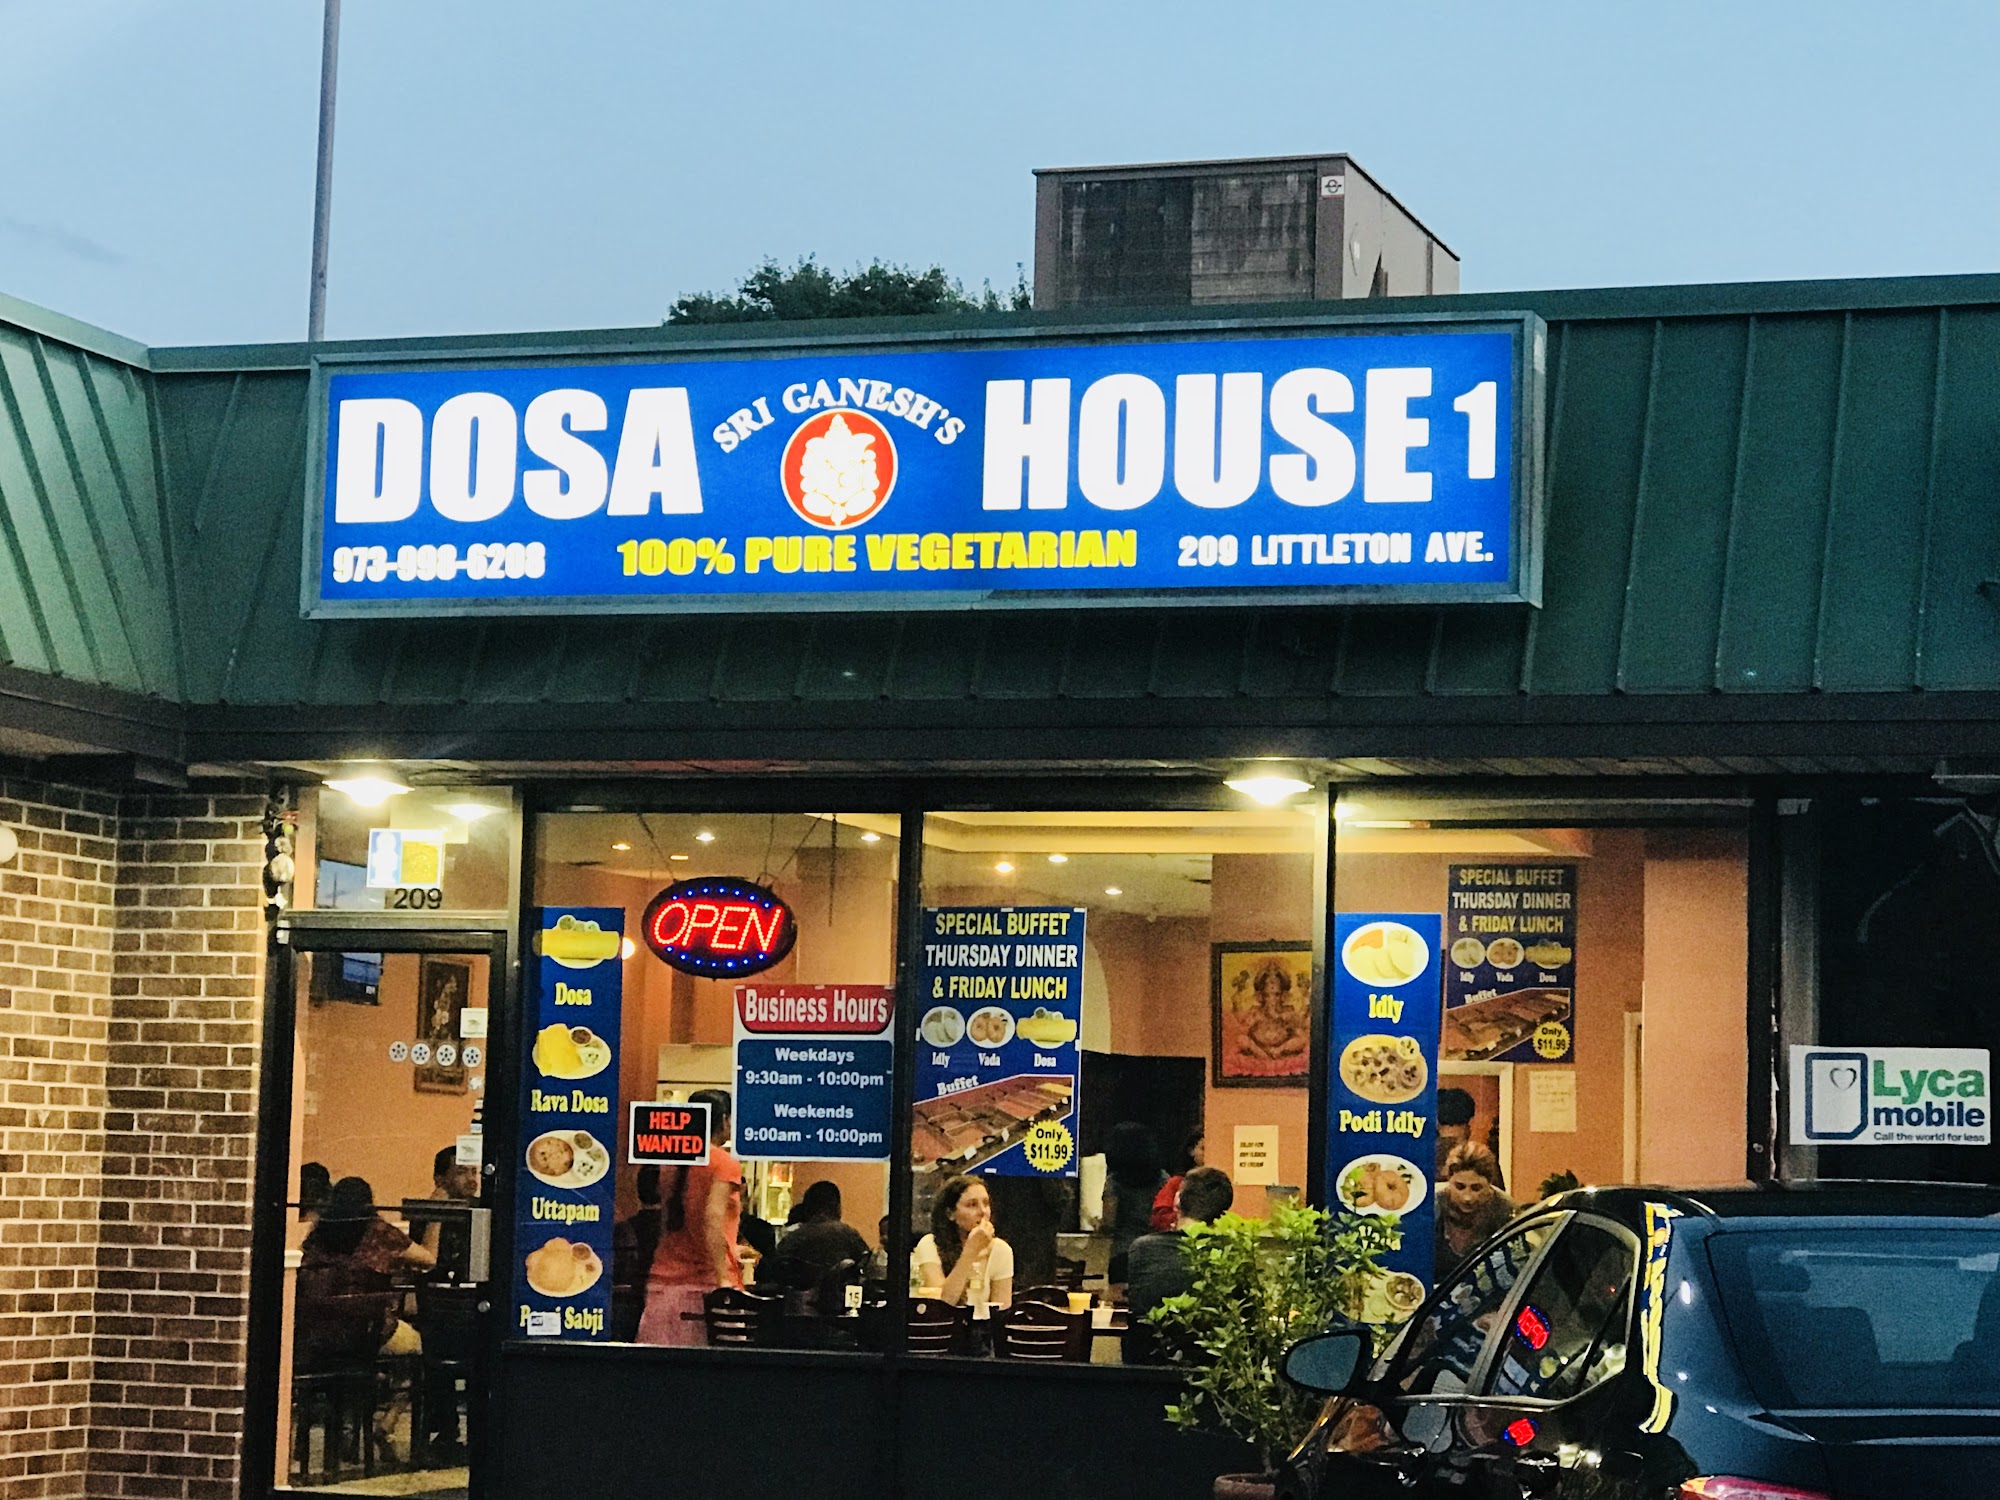 Sri Ganesh Dosa house 1